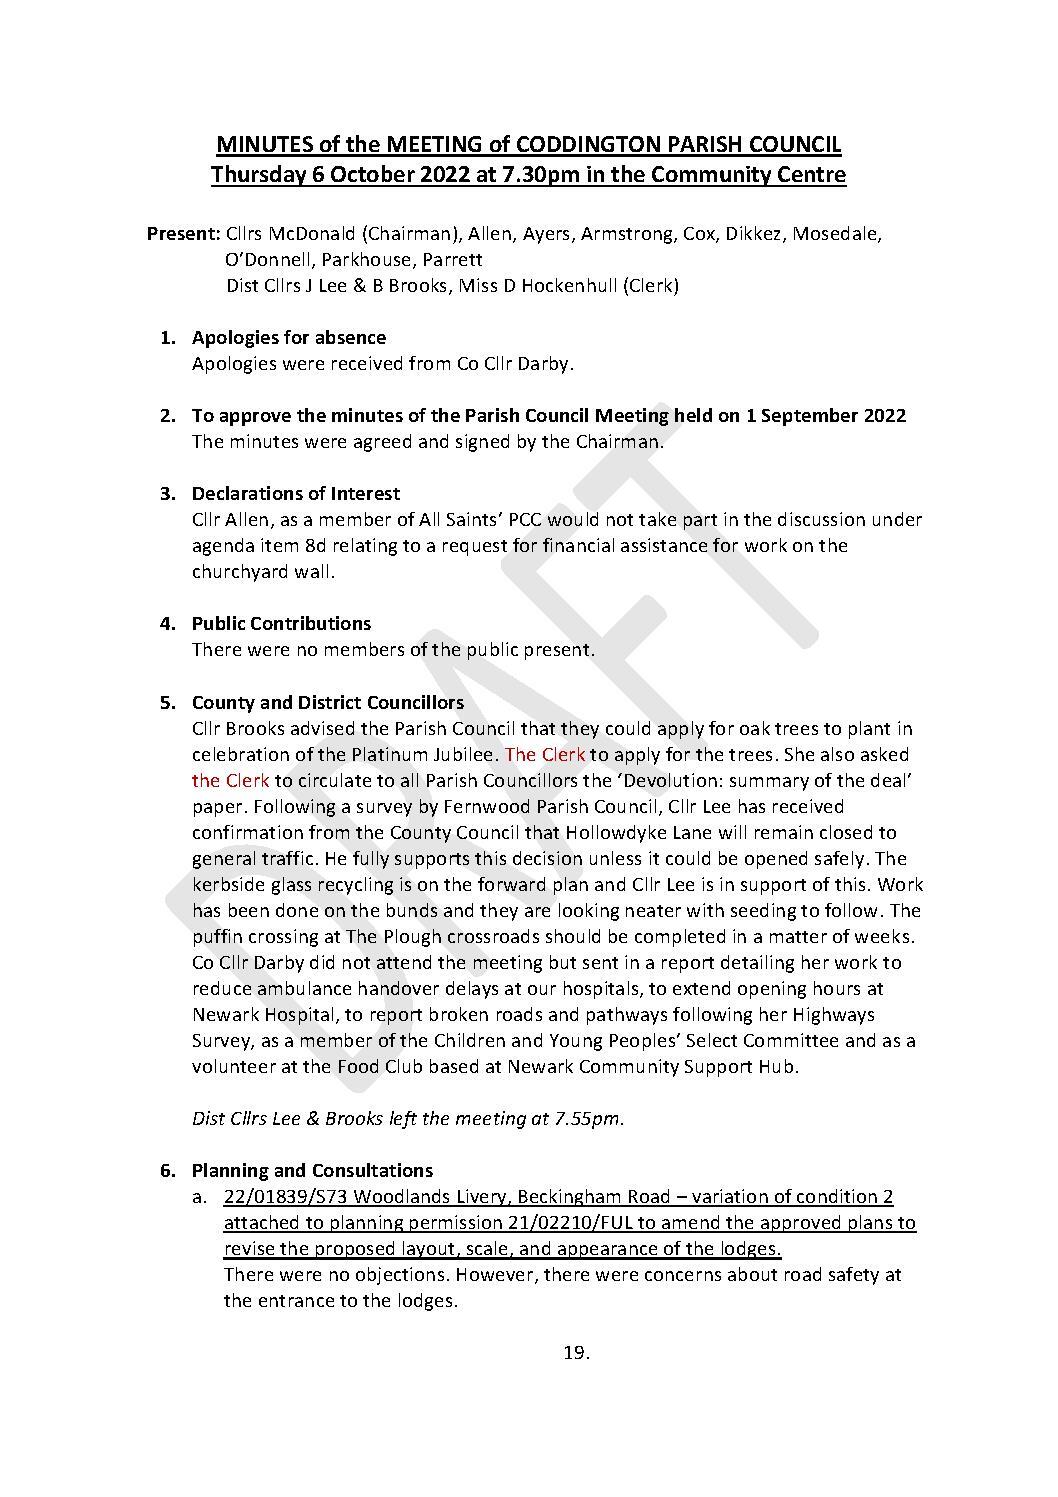 Parish Council Meeting 6 October 2022 Minutes